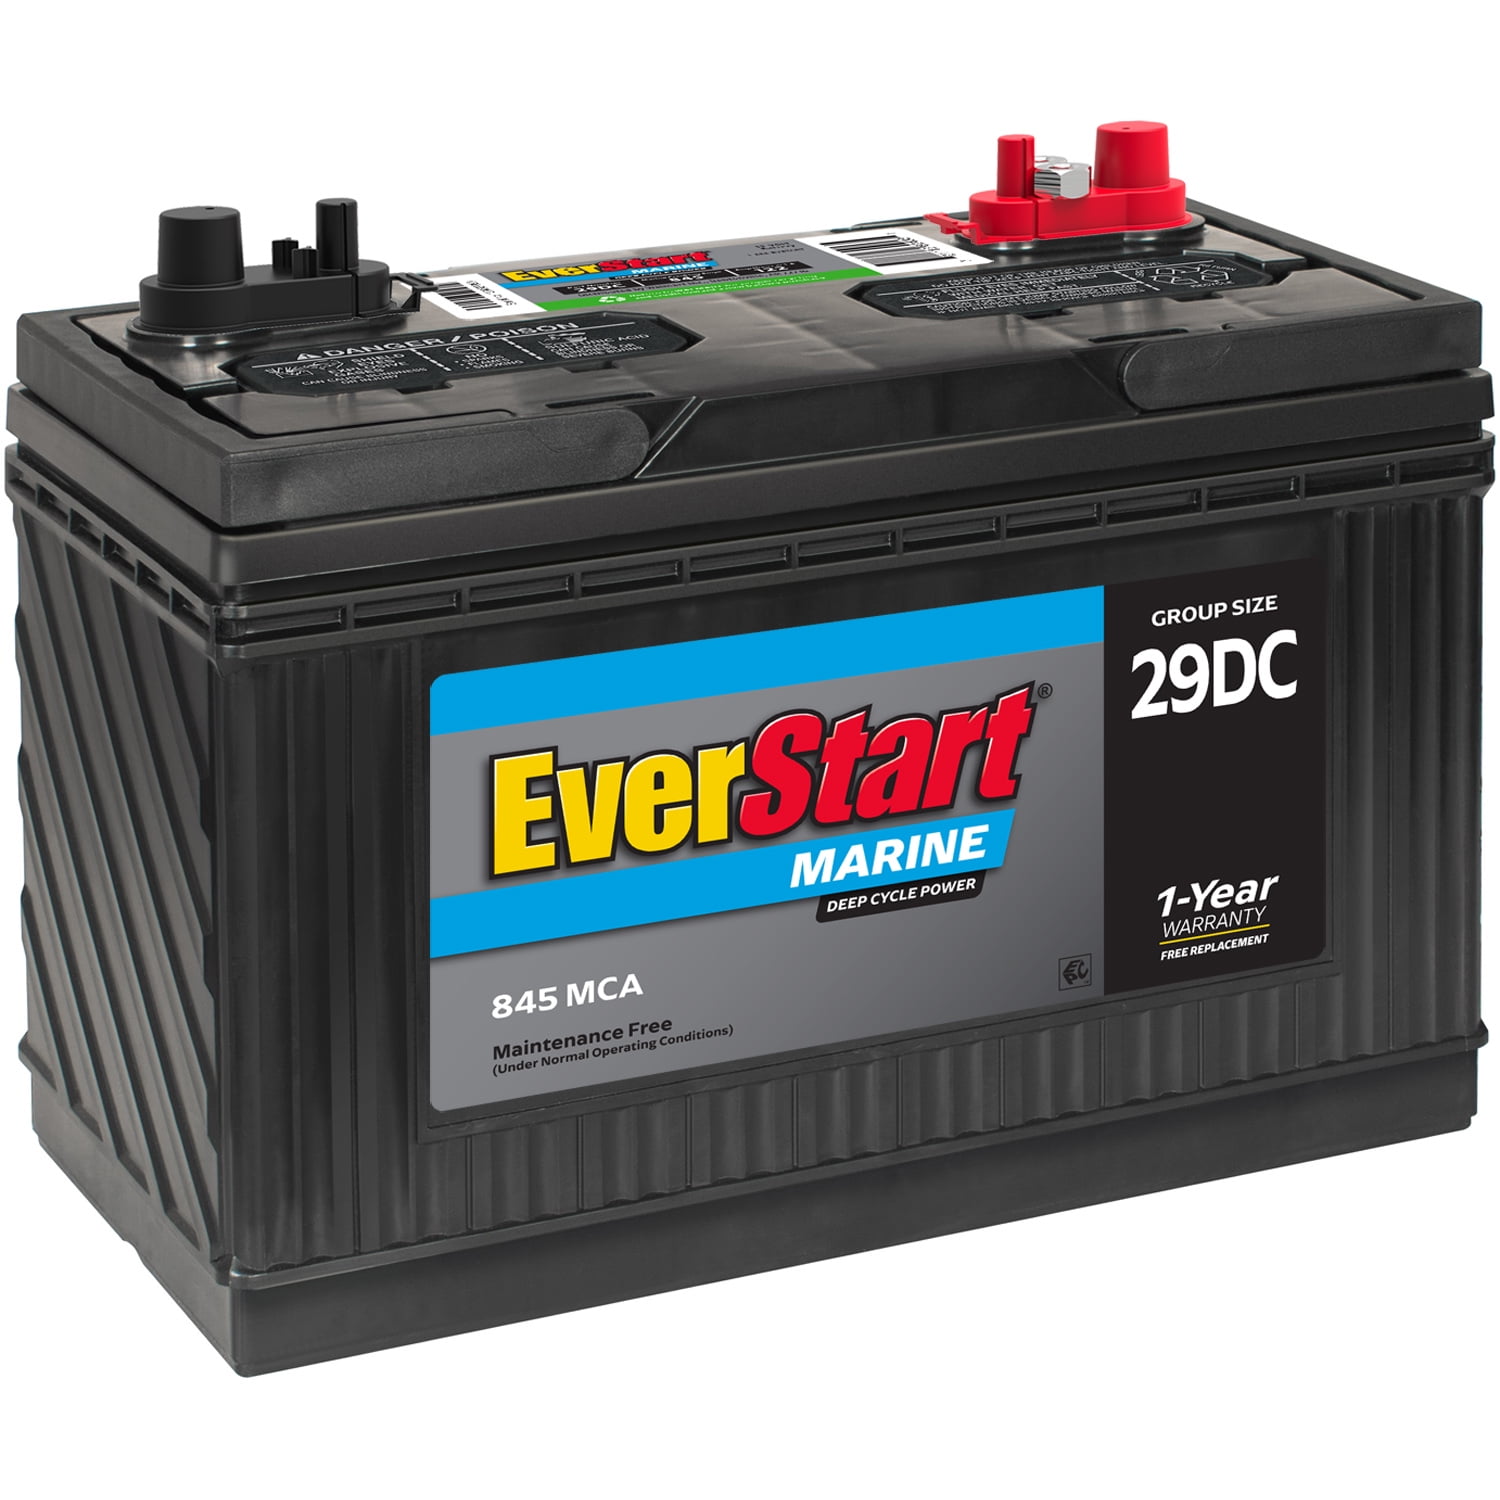 EverStart Lead Acid Marine & Deep Battery, Group Size 29DC (12V/845 -